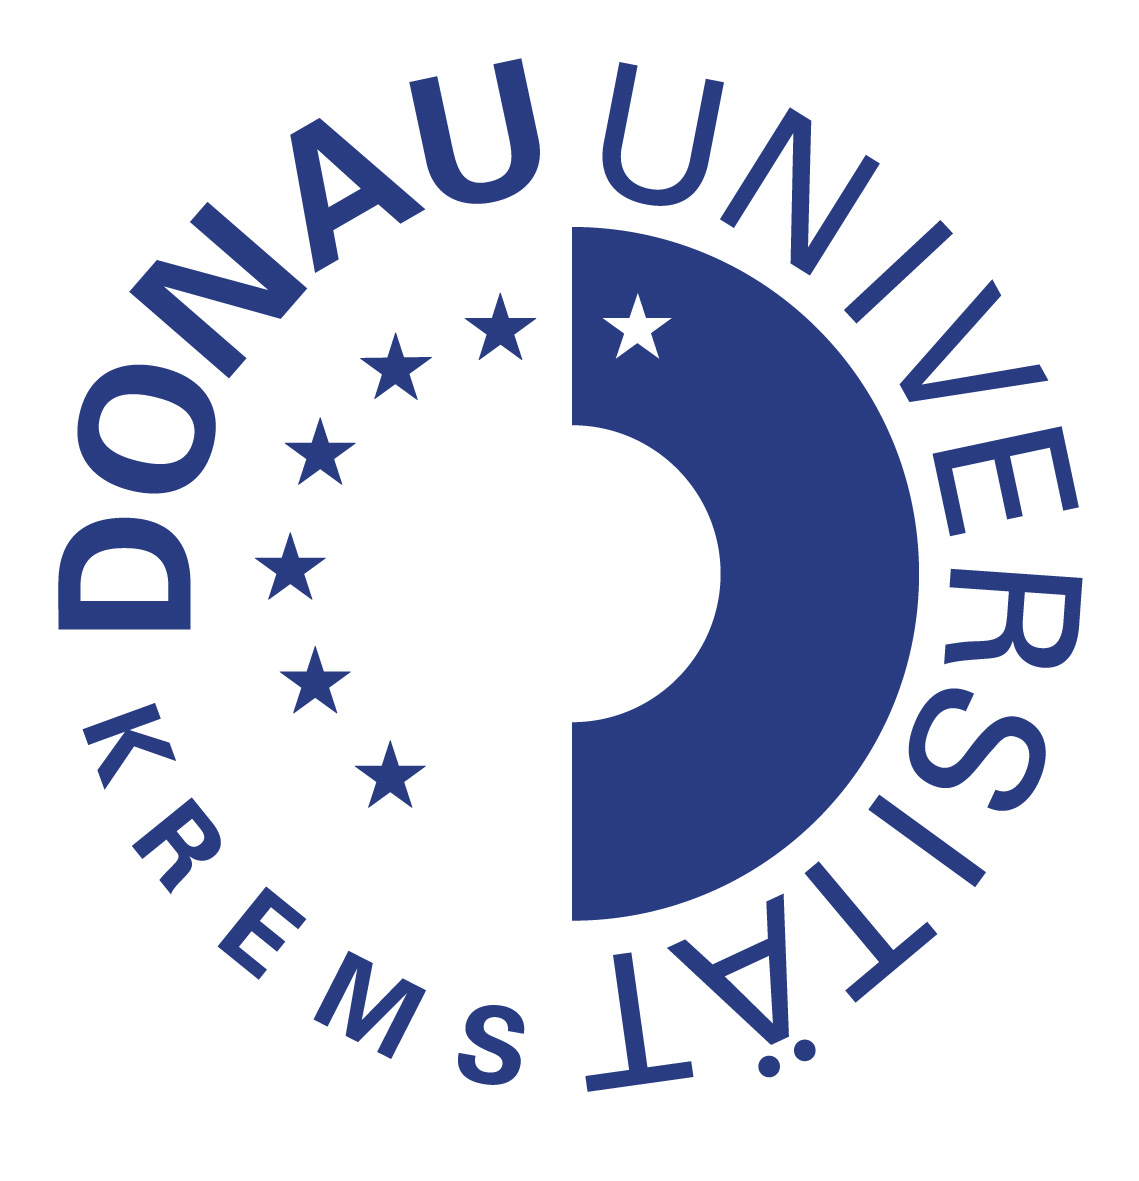 Donauuniversität Krems